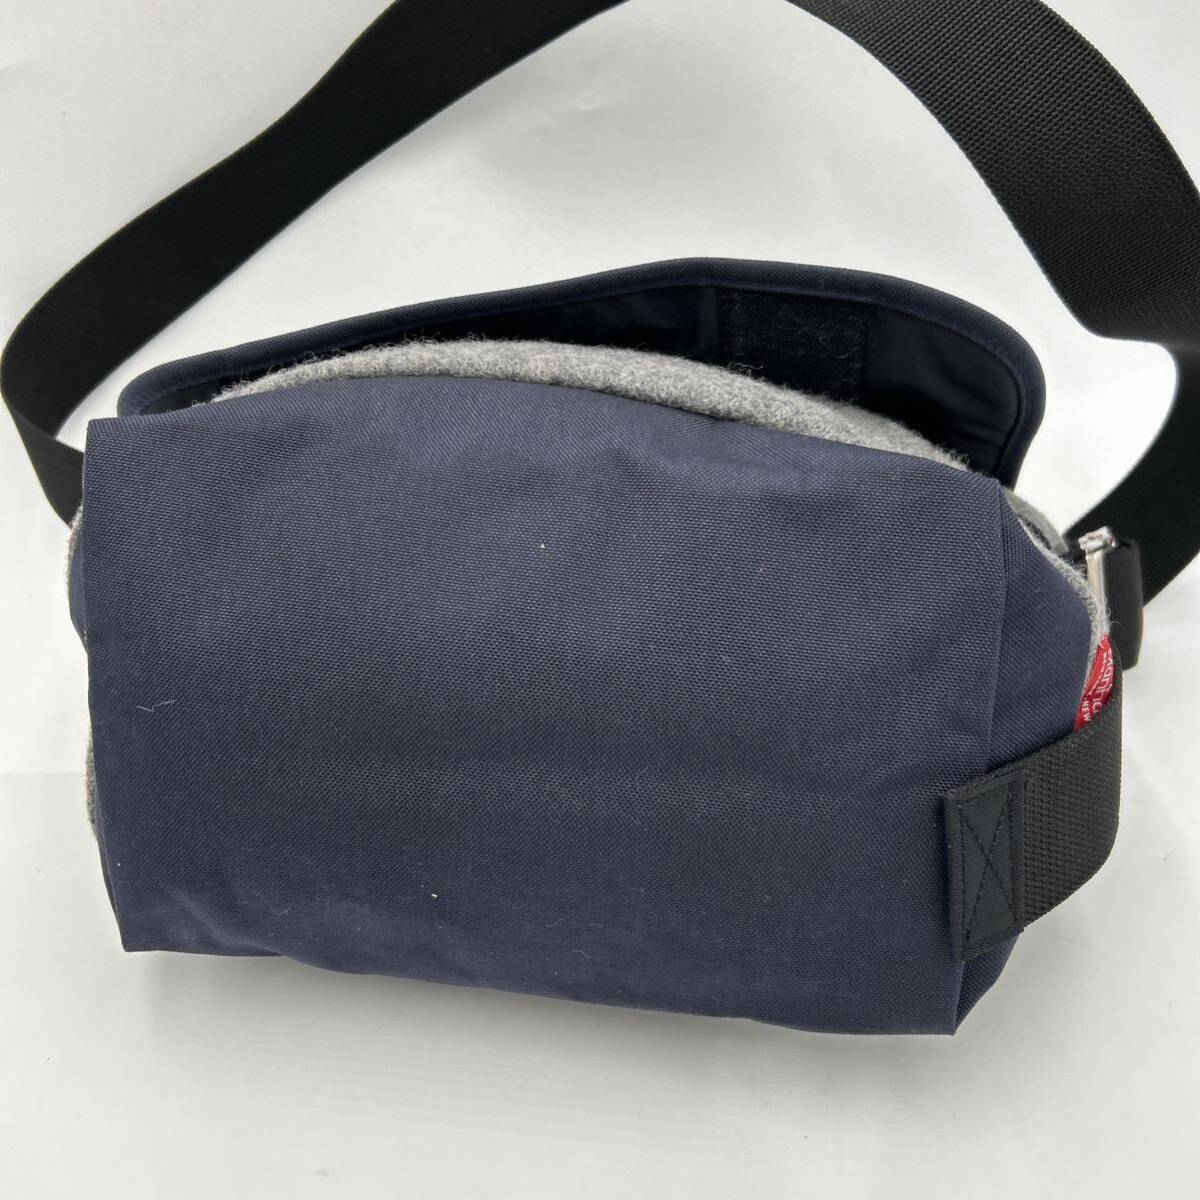 A @ using one's way eminent \' popular model \'Manhattan Portage Manhattan Poe te-jiCORDURA messenger bag diagonal .. bag shoulder bag 